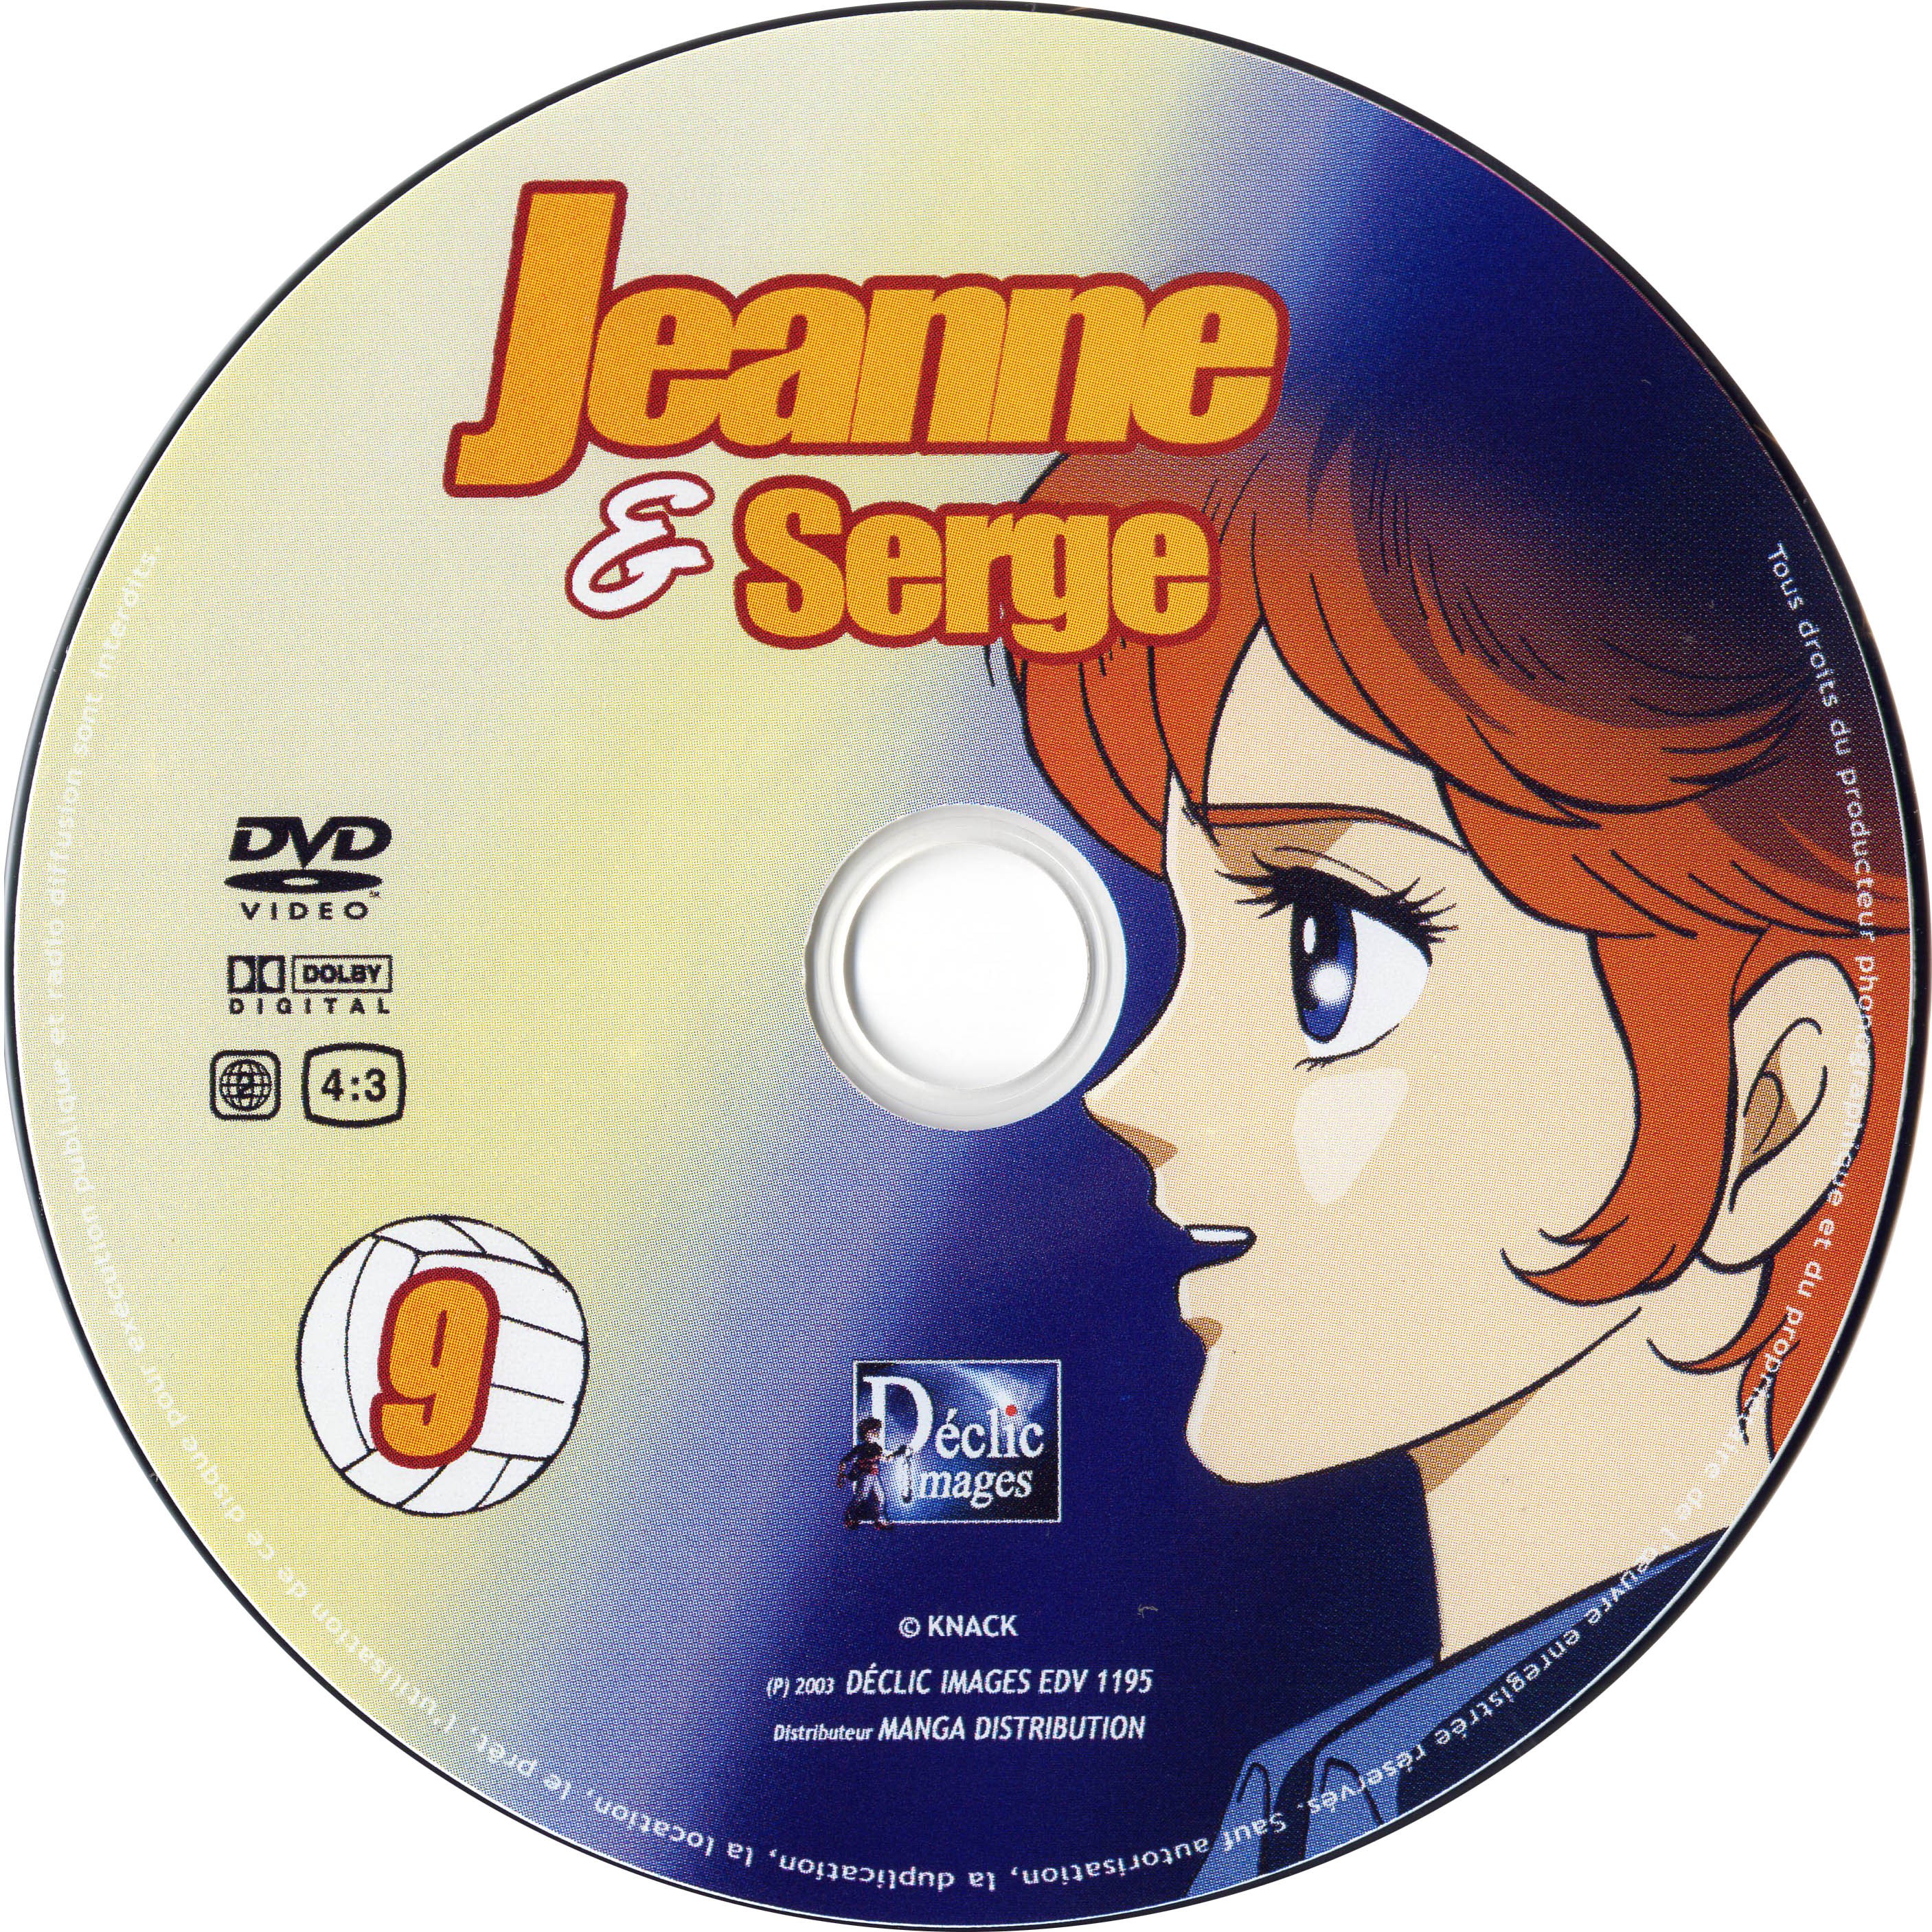 Jeanne et Serge vol 09